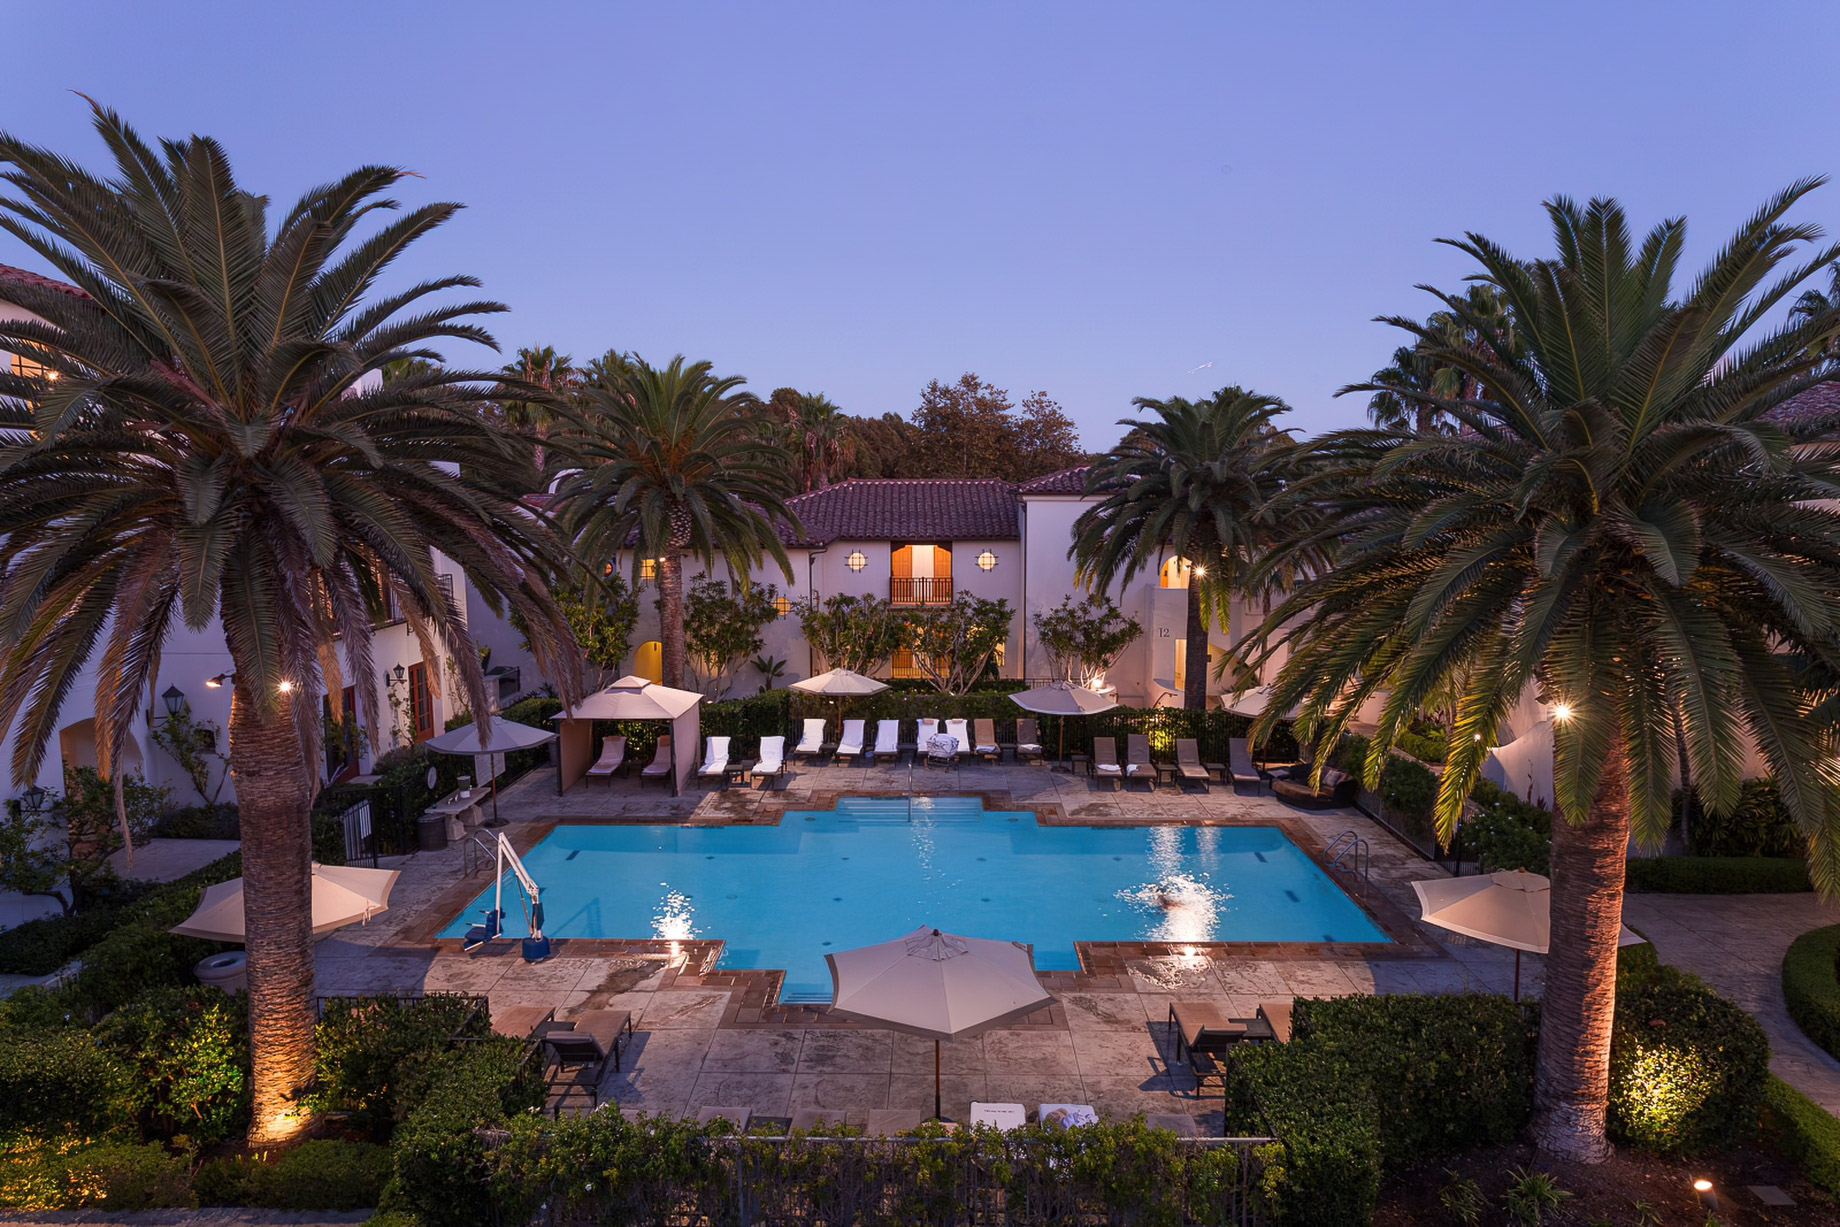 The Ritz-Carlton Bacara, Santa Barbara Resort - Santa Barbara, CA, USA - Resort Pool View Sunset